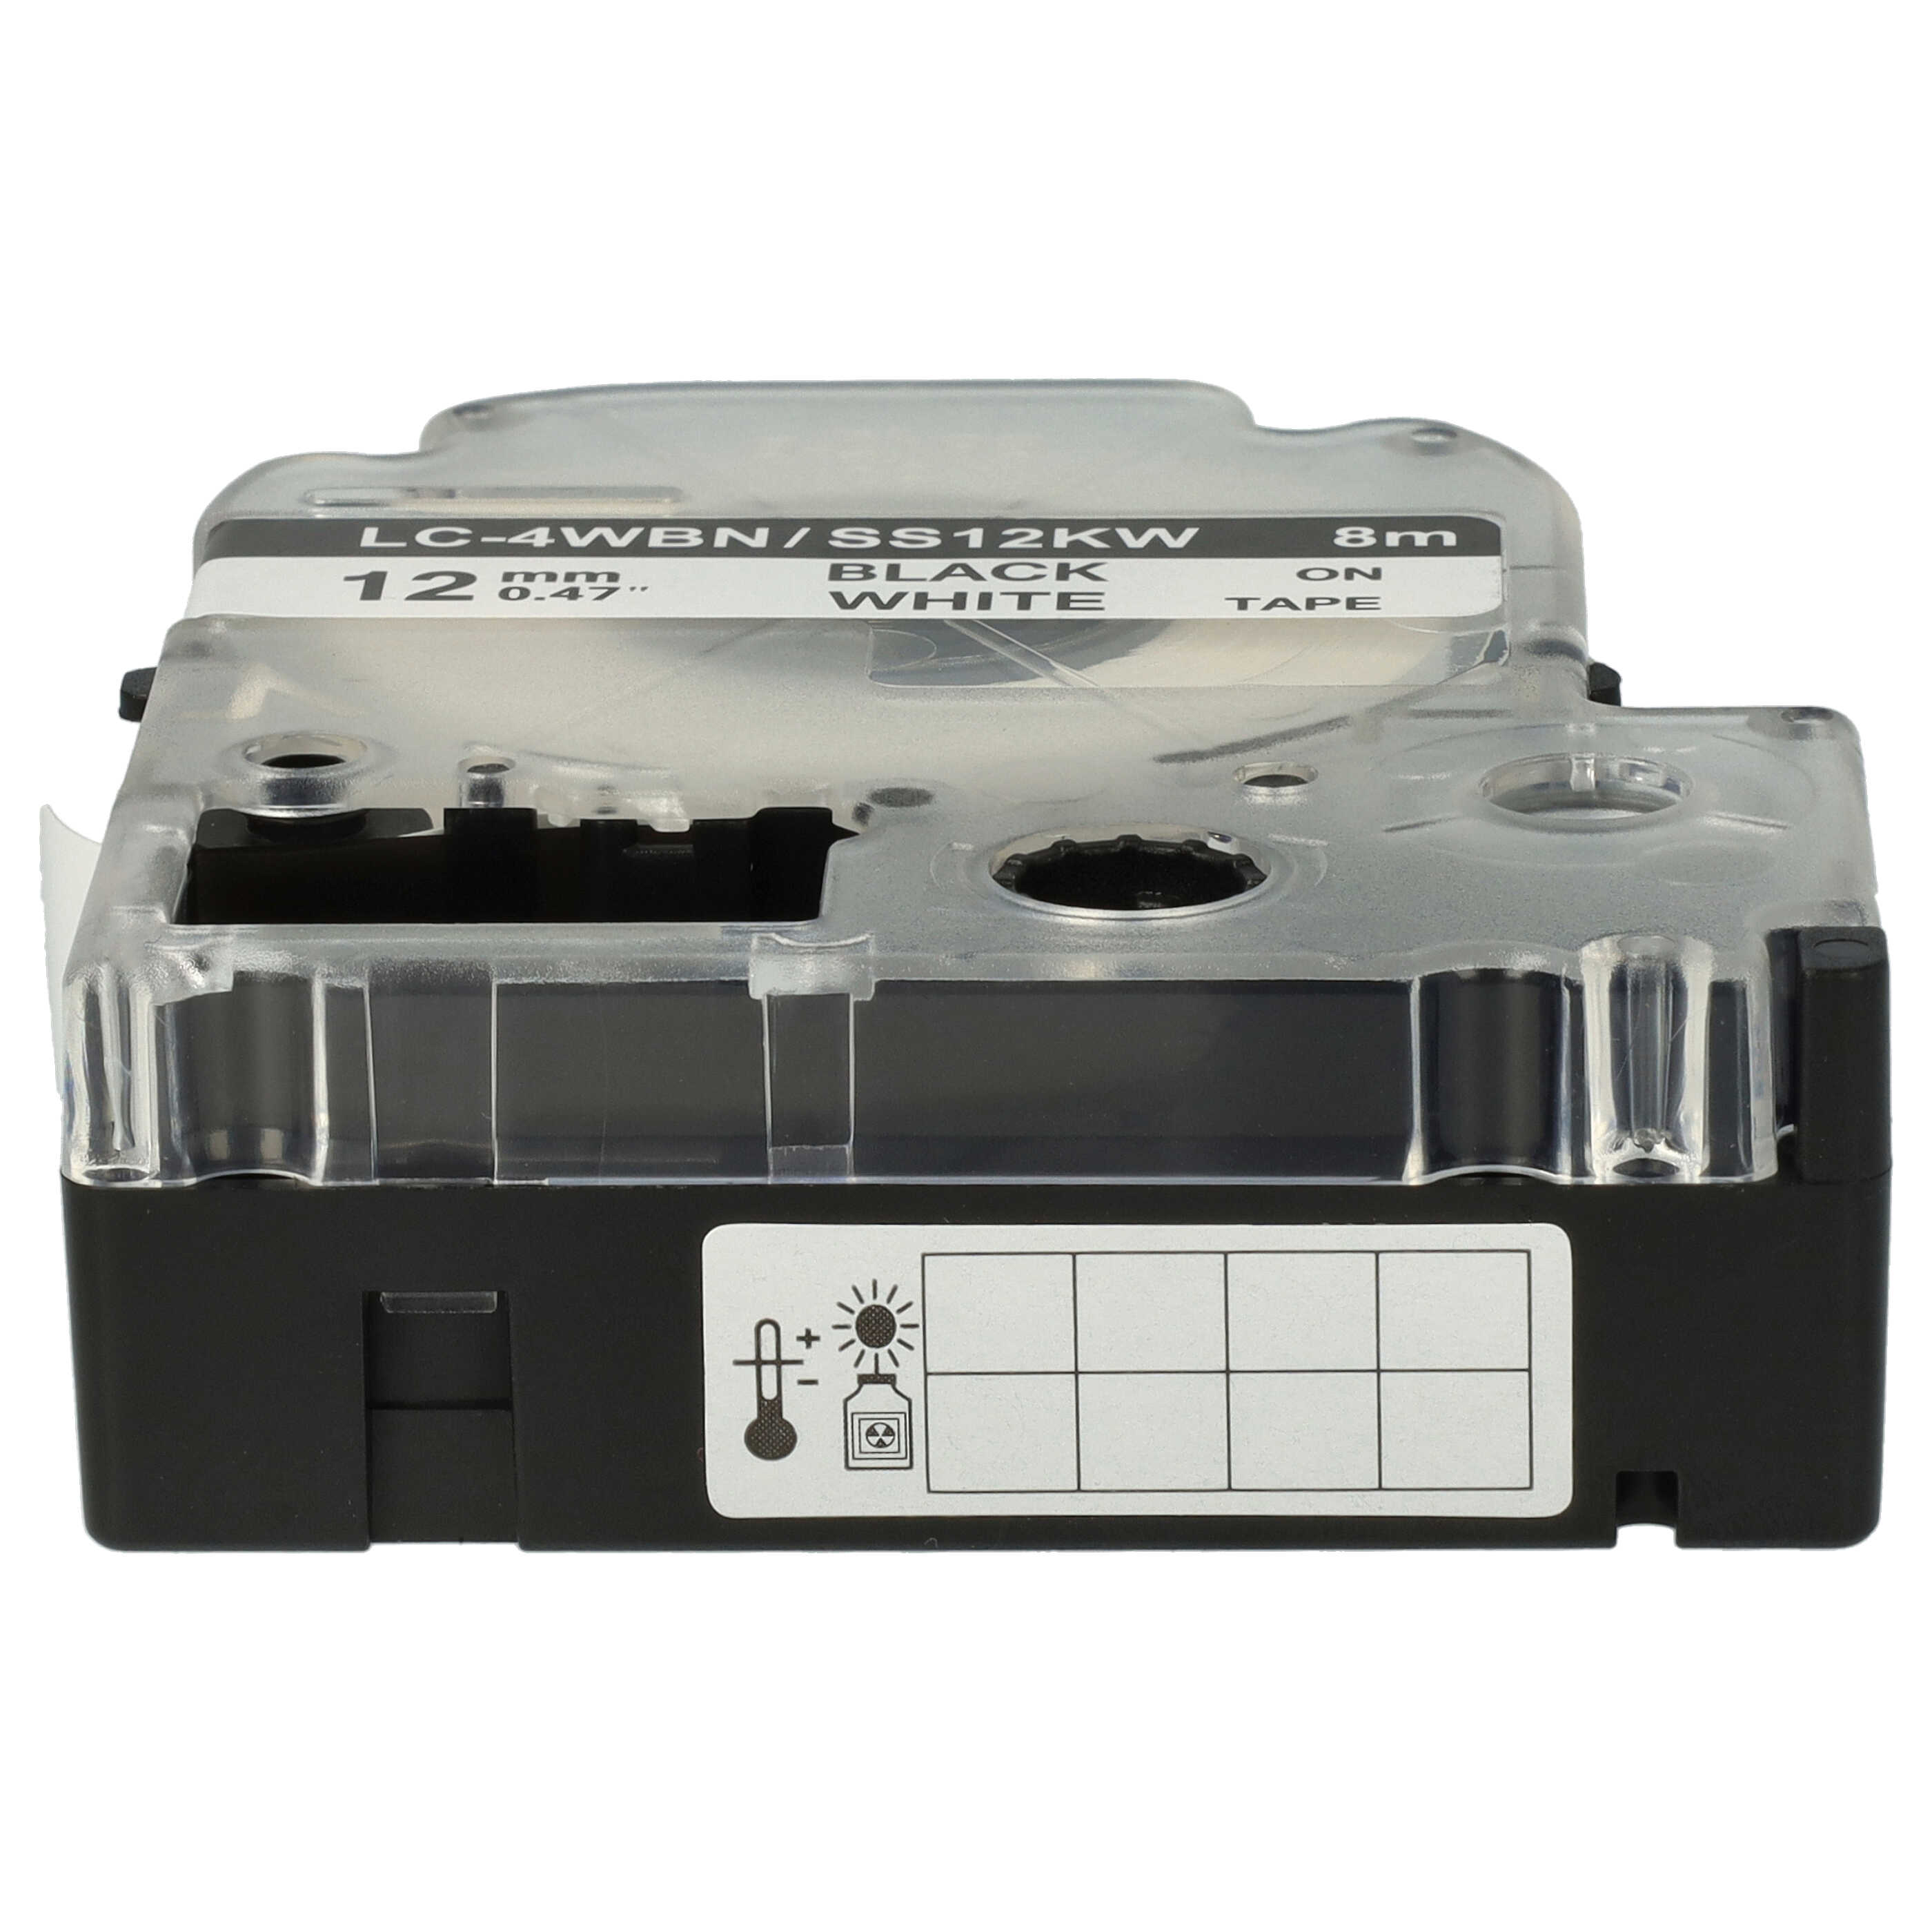 3x Casete cinta escritura reemplaza Epson SS12KW, LC-4WBN Negro su Blanco